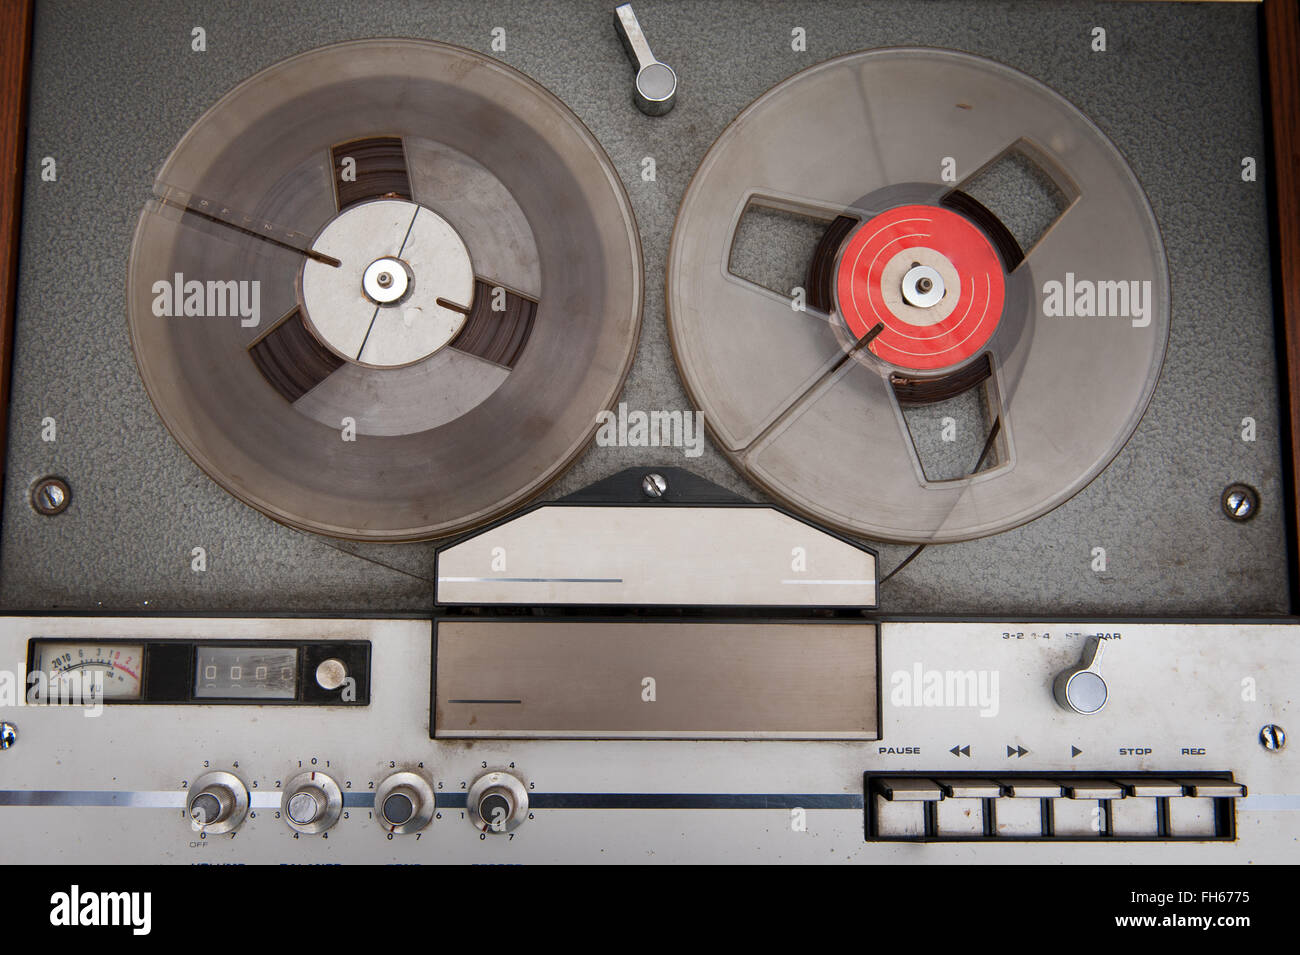 Old Reel Tape Recorder Vintage Sound Stock Photo 1974832940